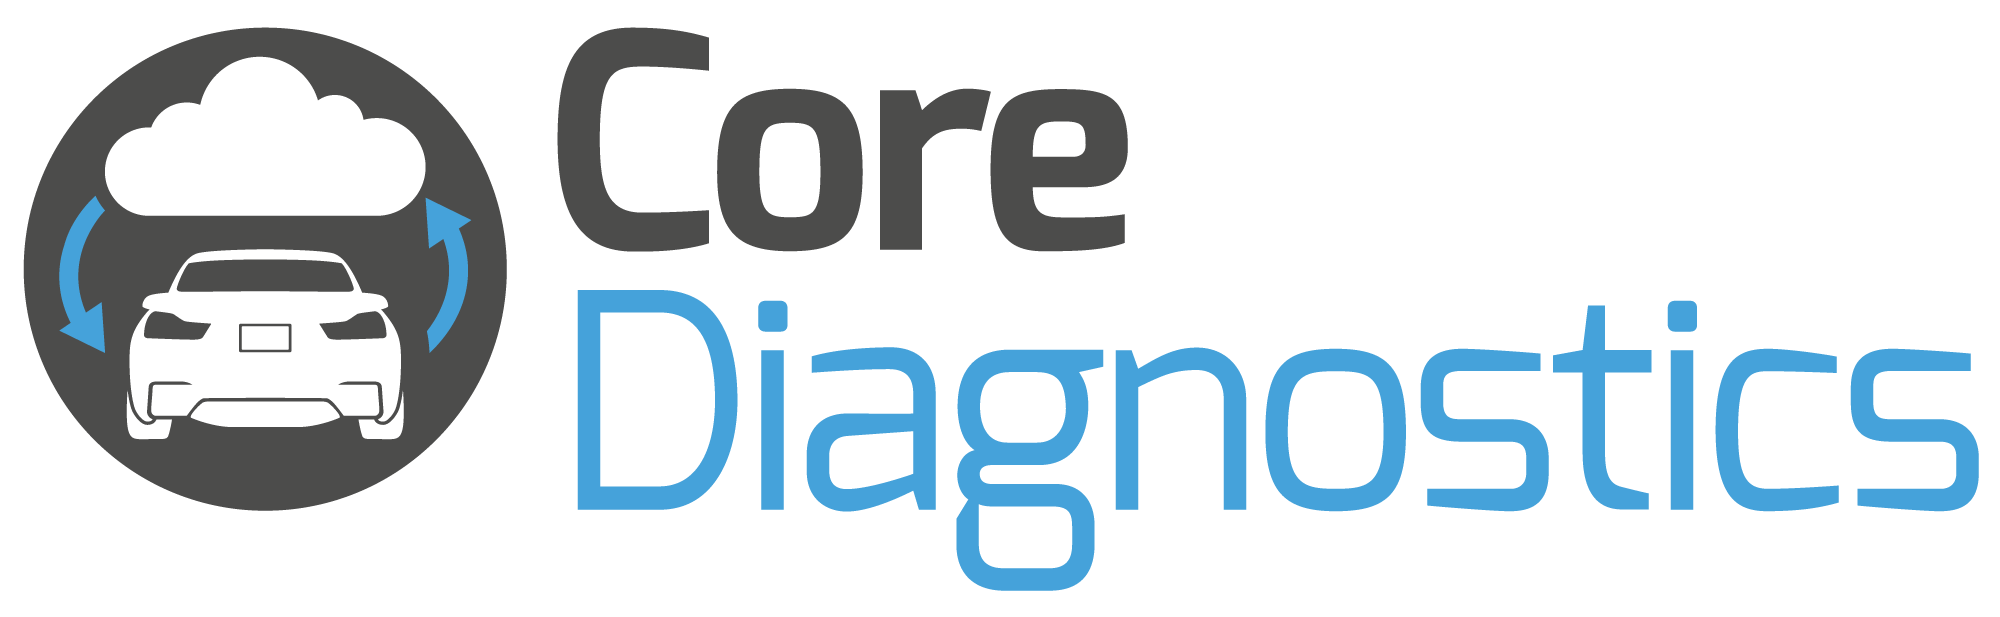 Core Diagnostics joins the NBRA